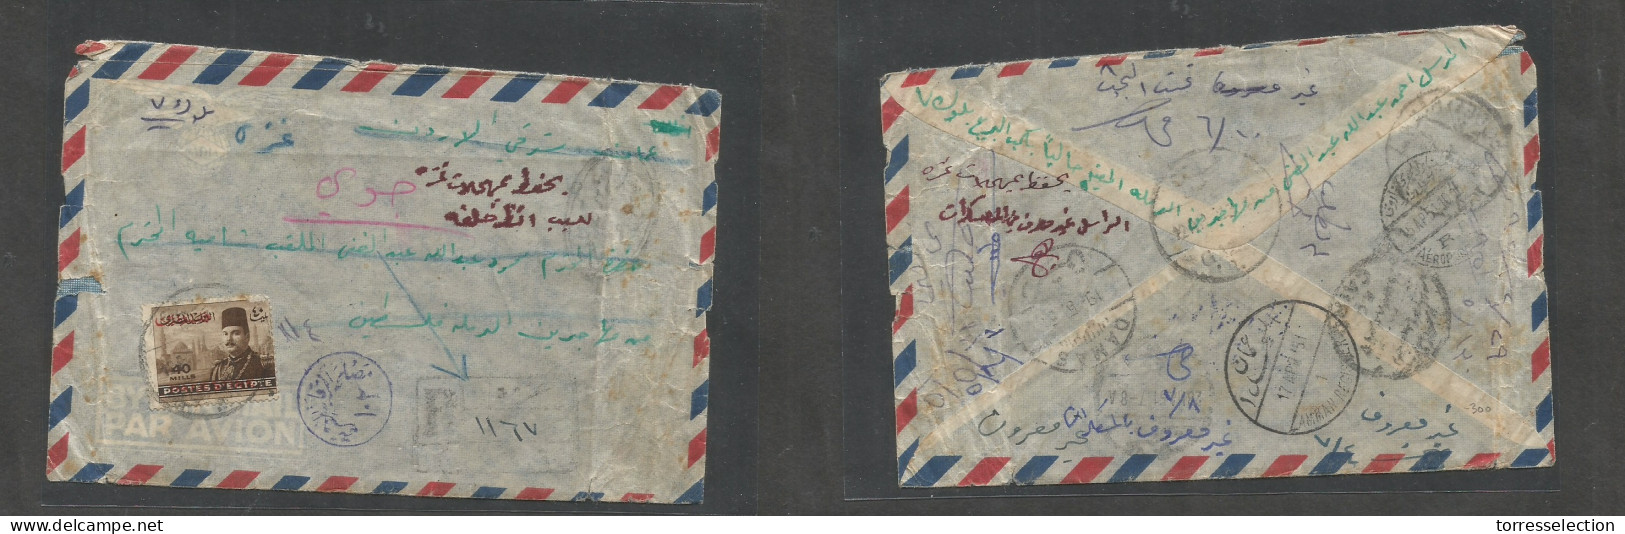 PALESTINE. 1951 (April) Gaza - Damas - Amman, Retour. Registered Air Single Red Ovptd Fkd Envelope Reverse Transited. V  - Palestina